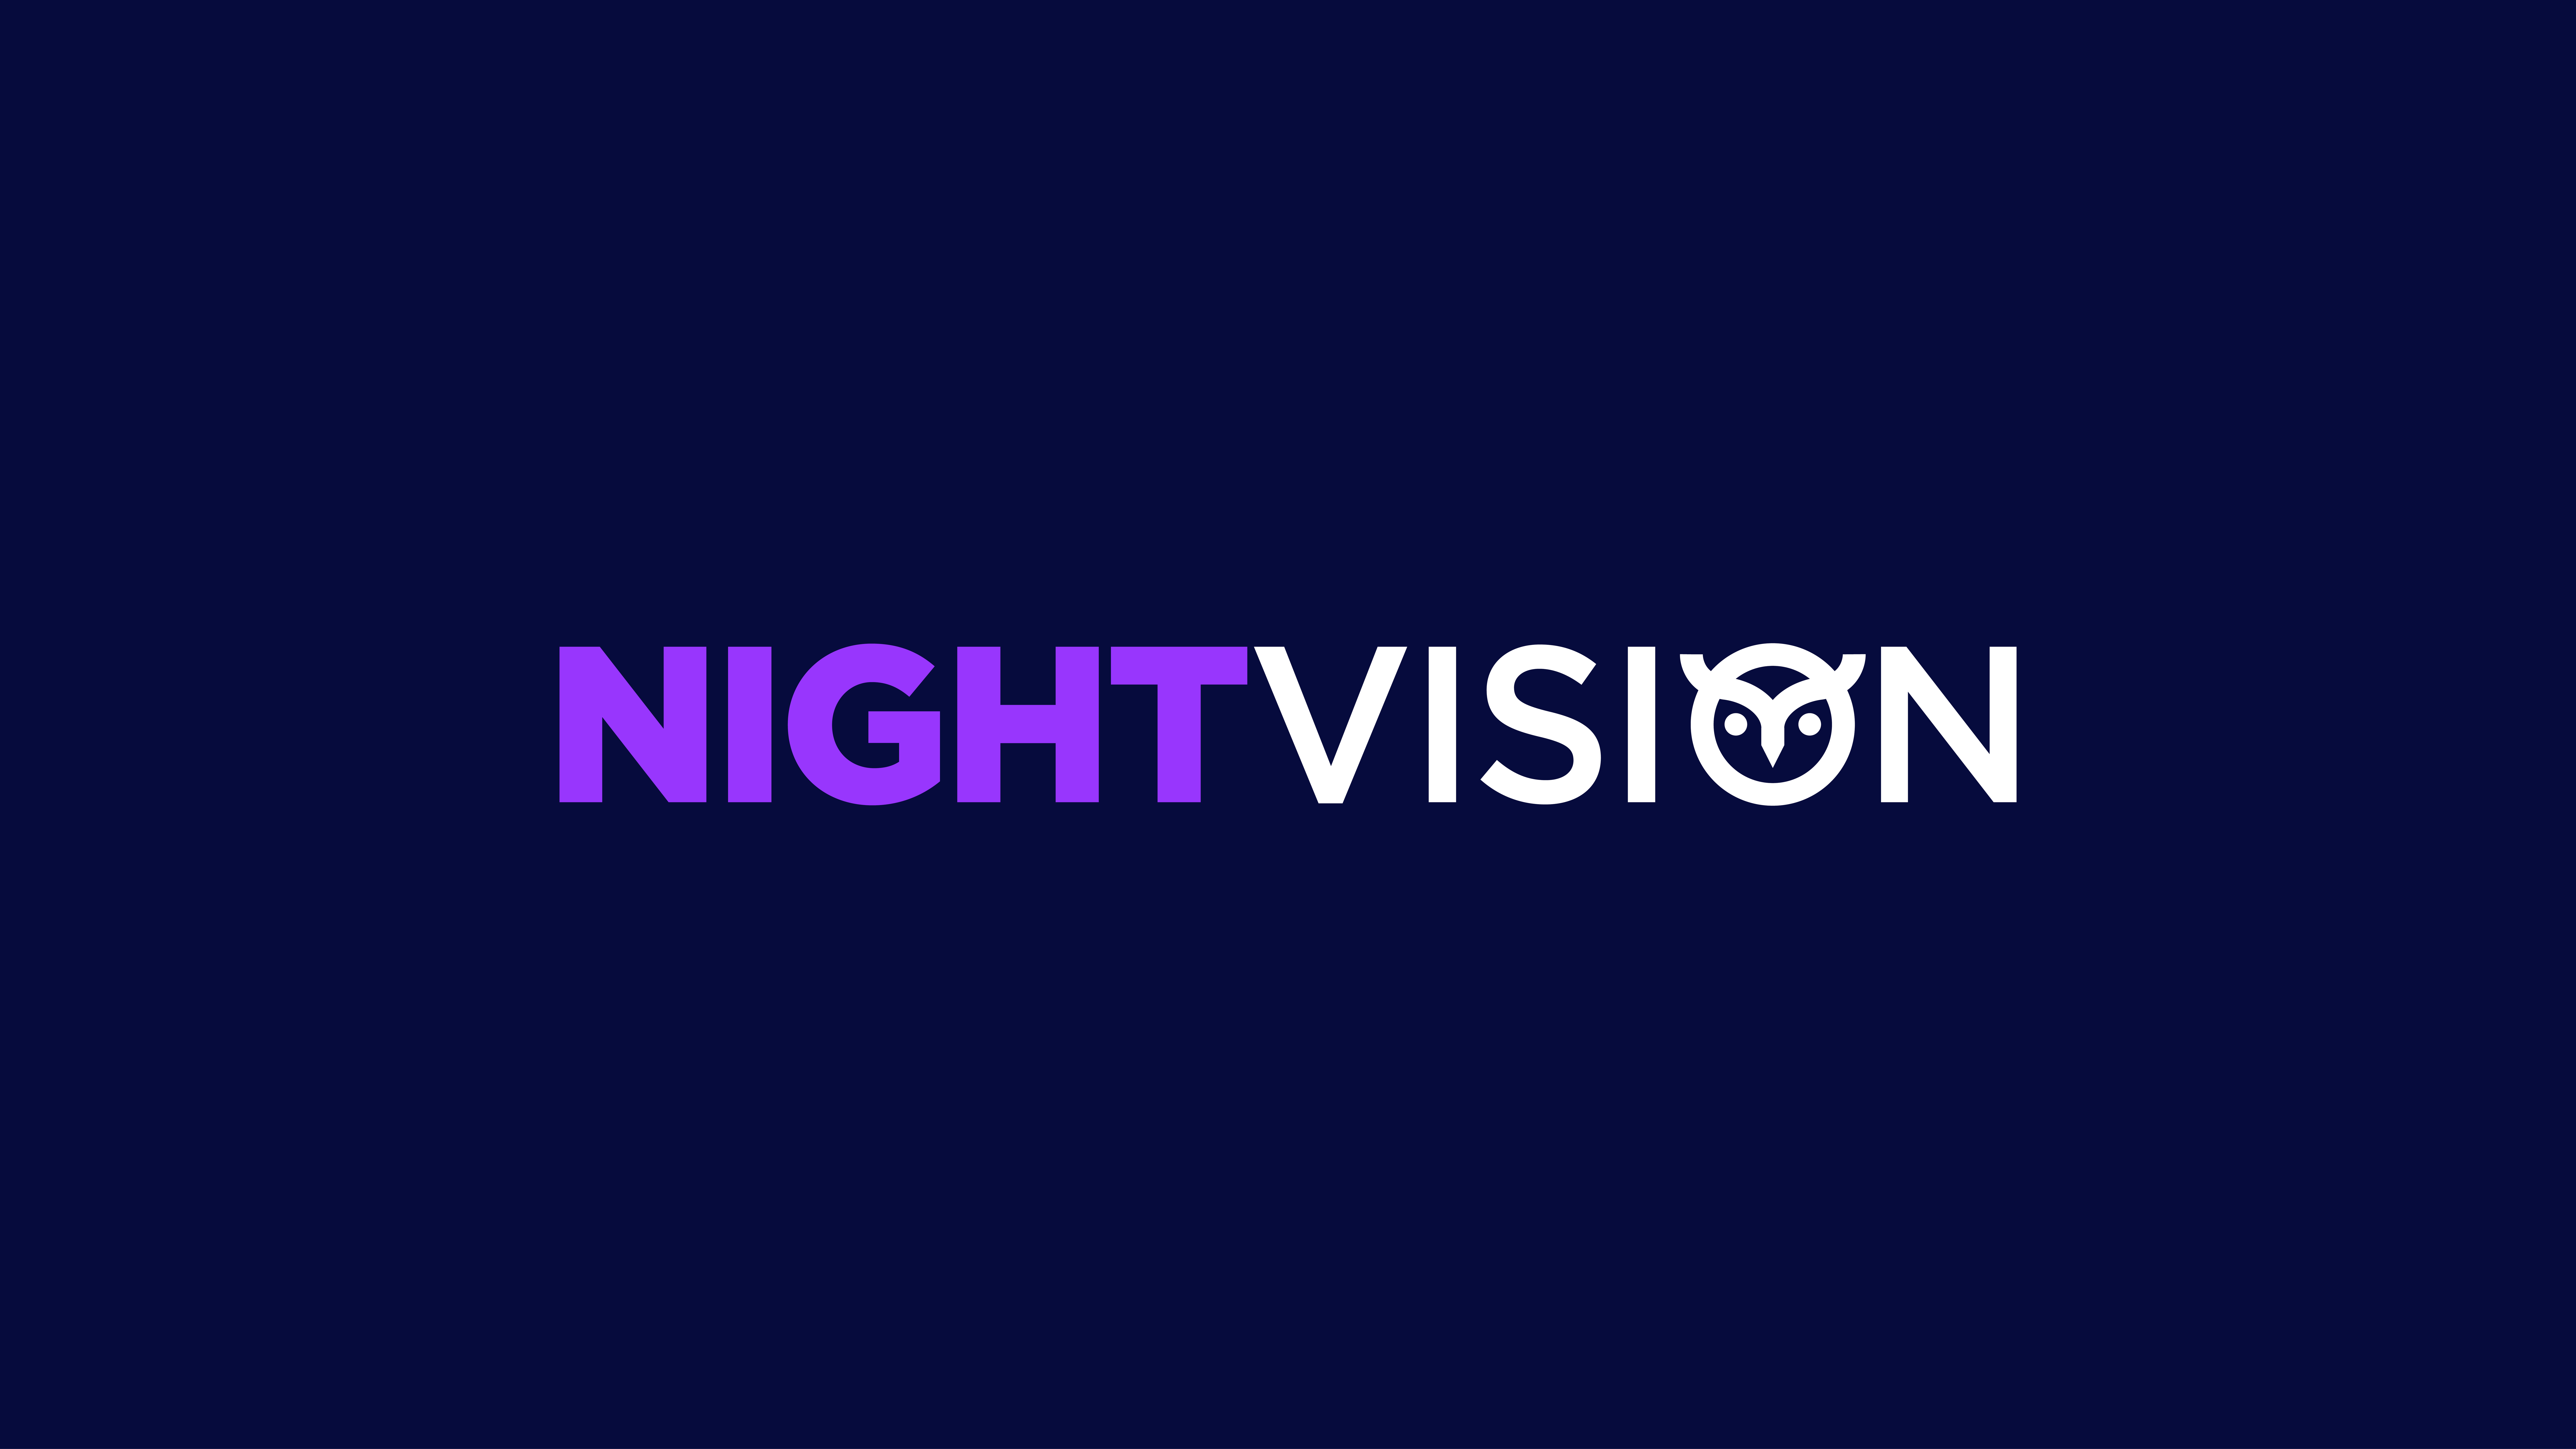 NightVision Logo